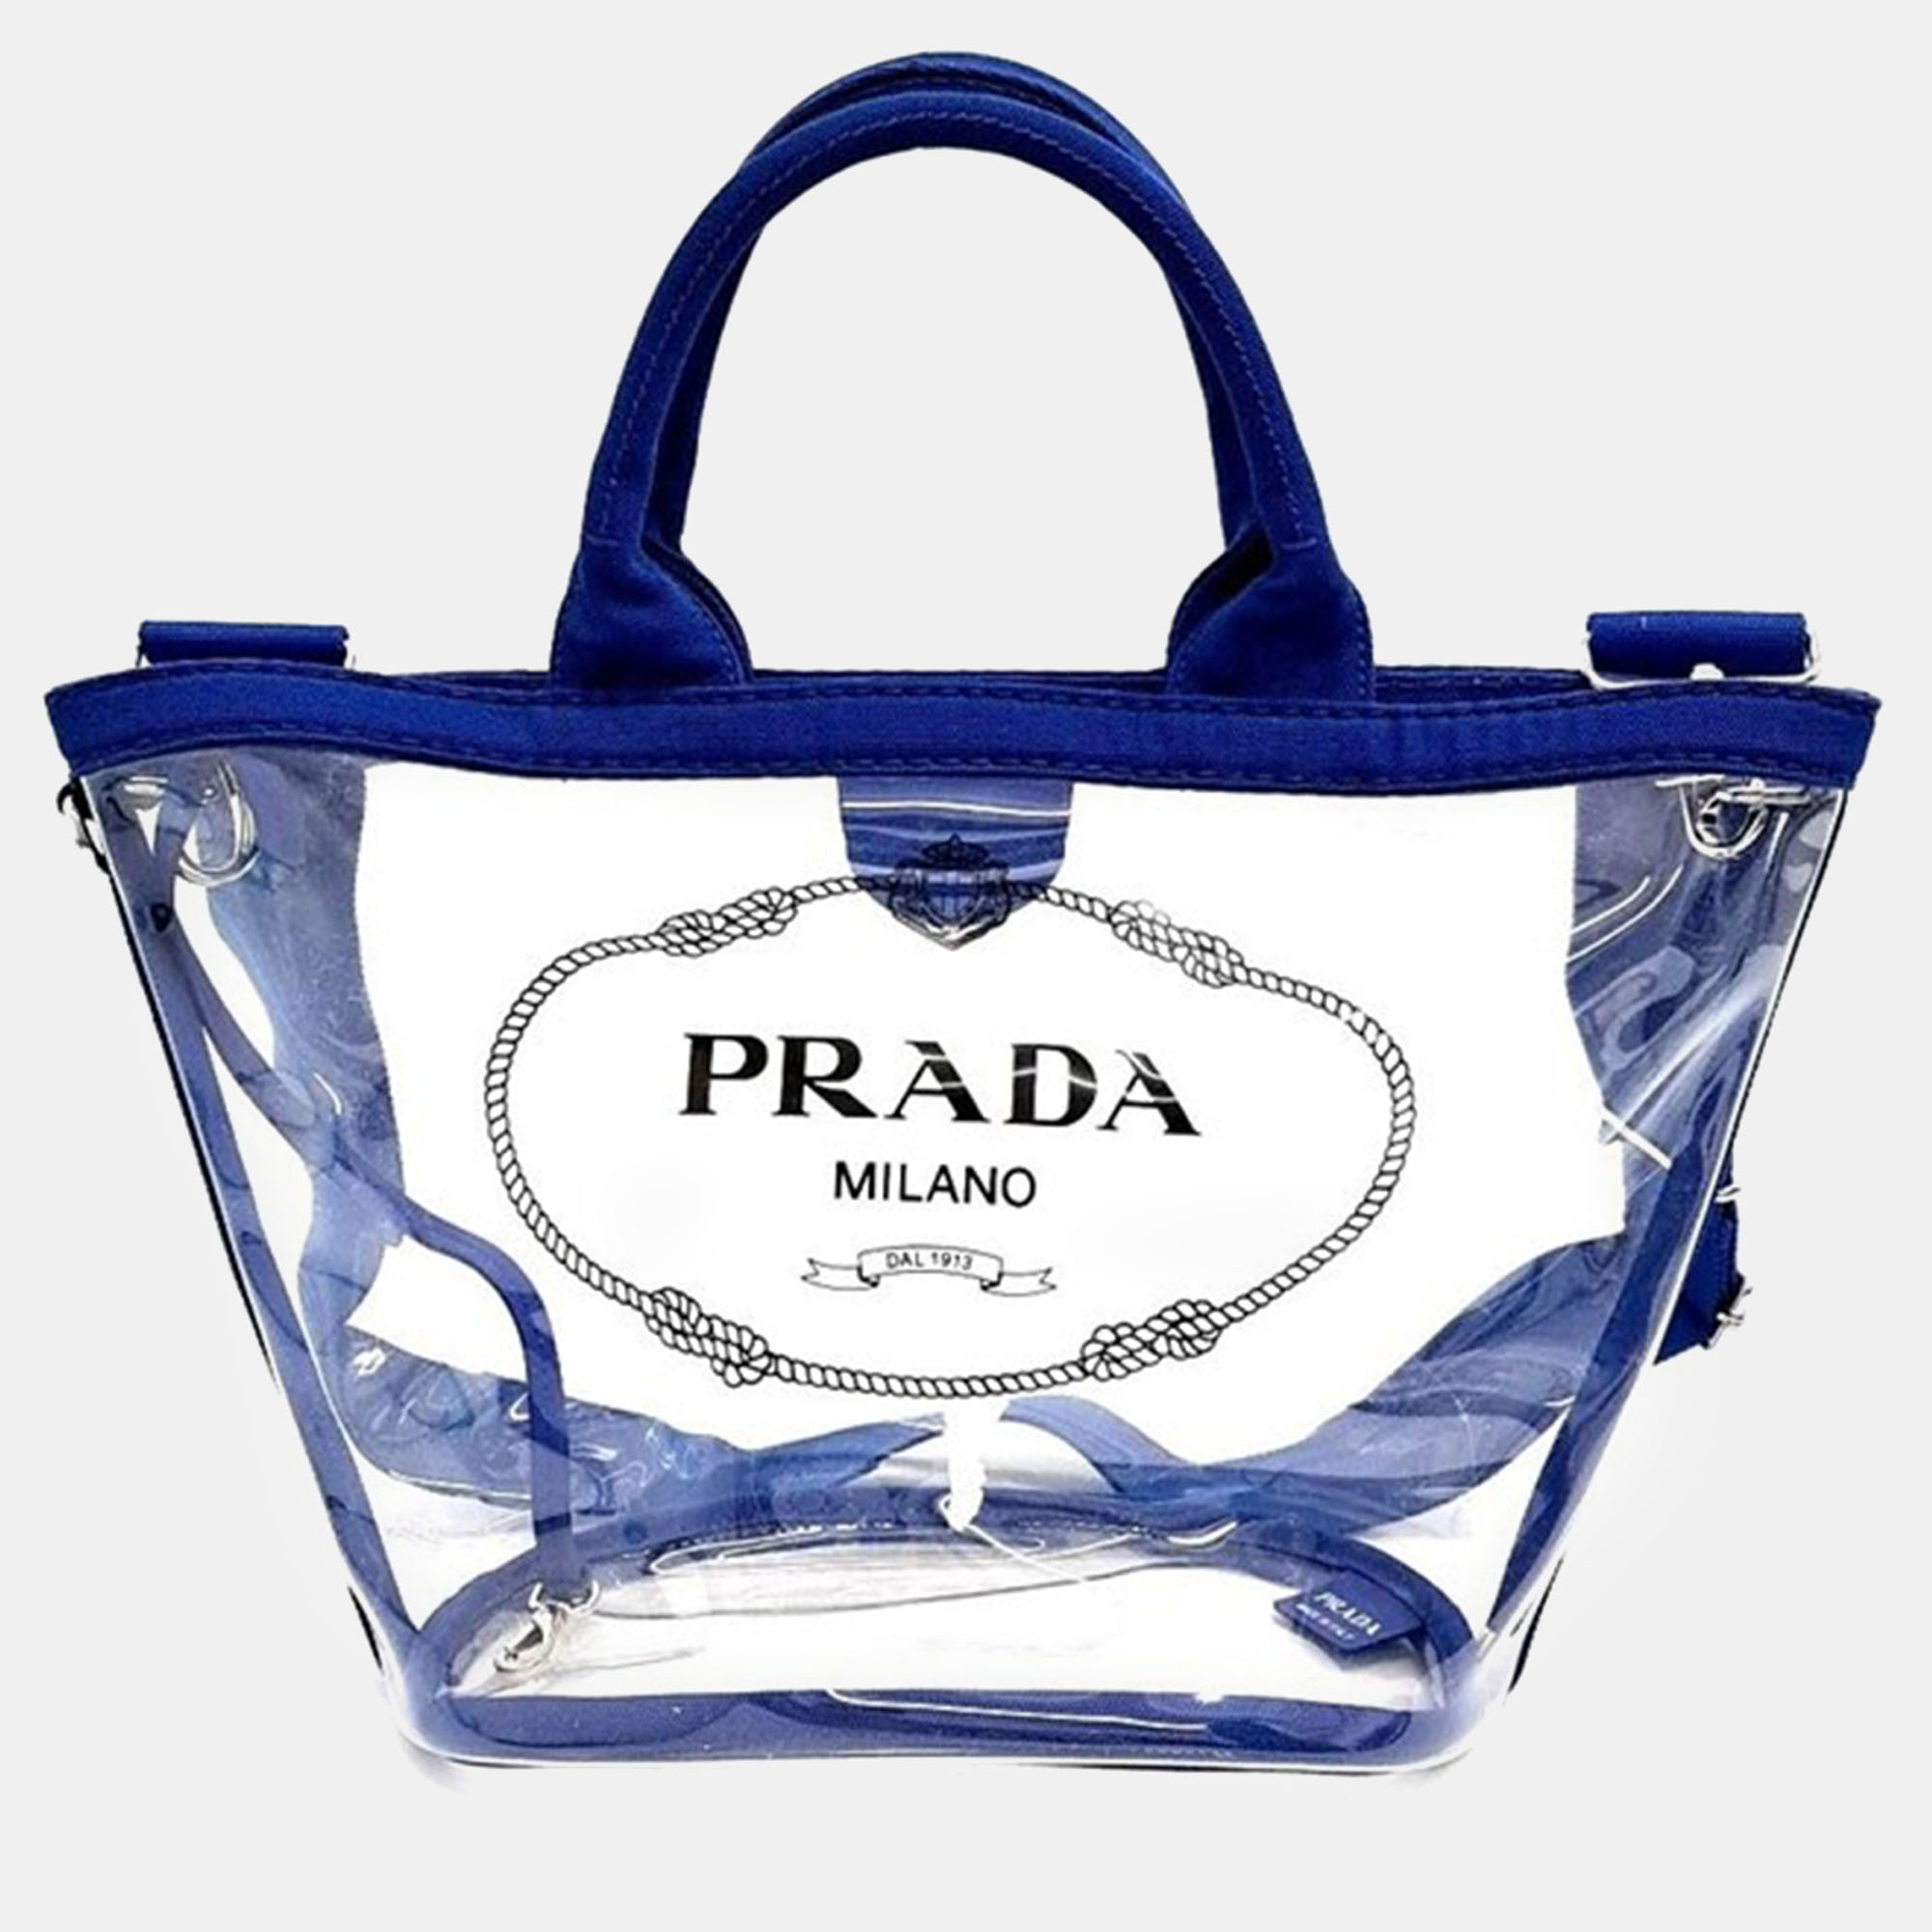 

Prada PVC Tote & Shoulder Bag, Blue